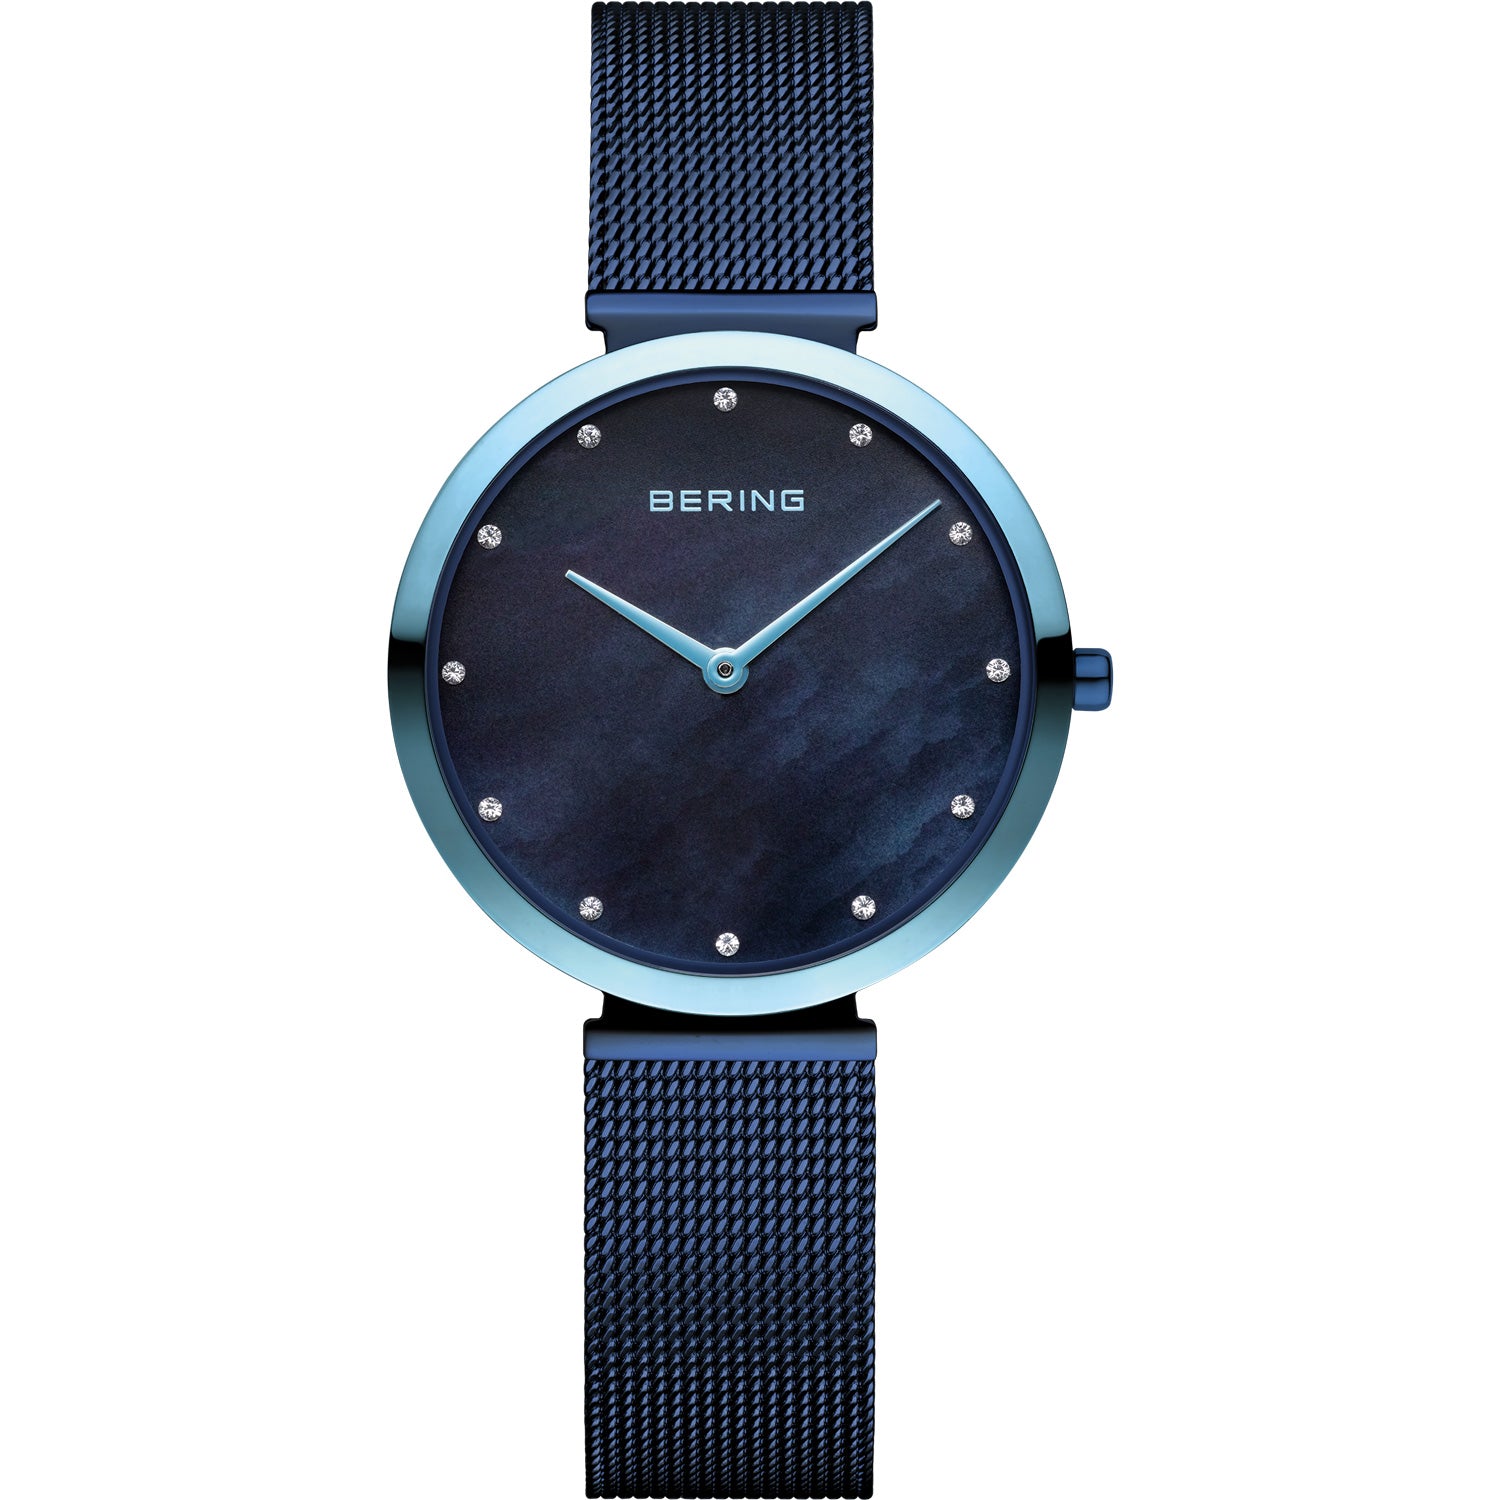 Bering-Armbanduhr blau APAUB4224 - Schmuck & Uhren Andrea Panick